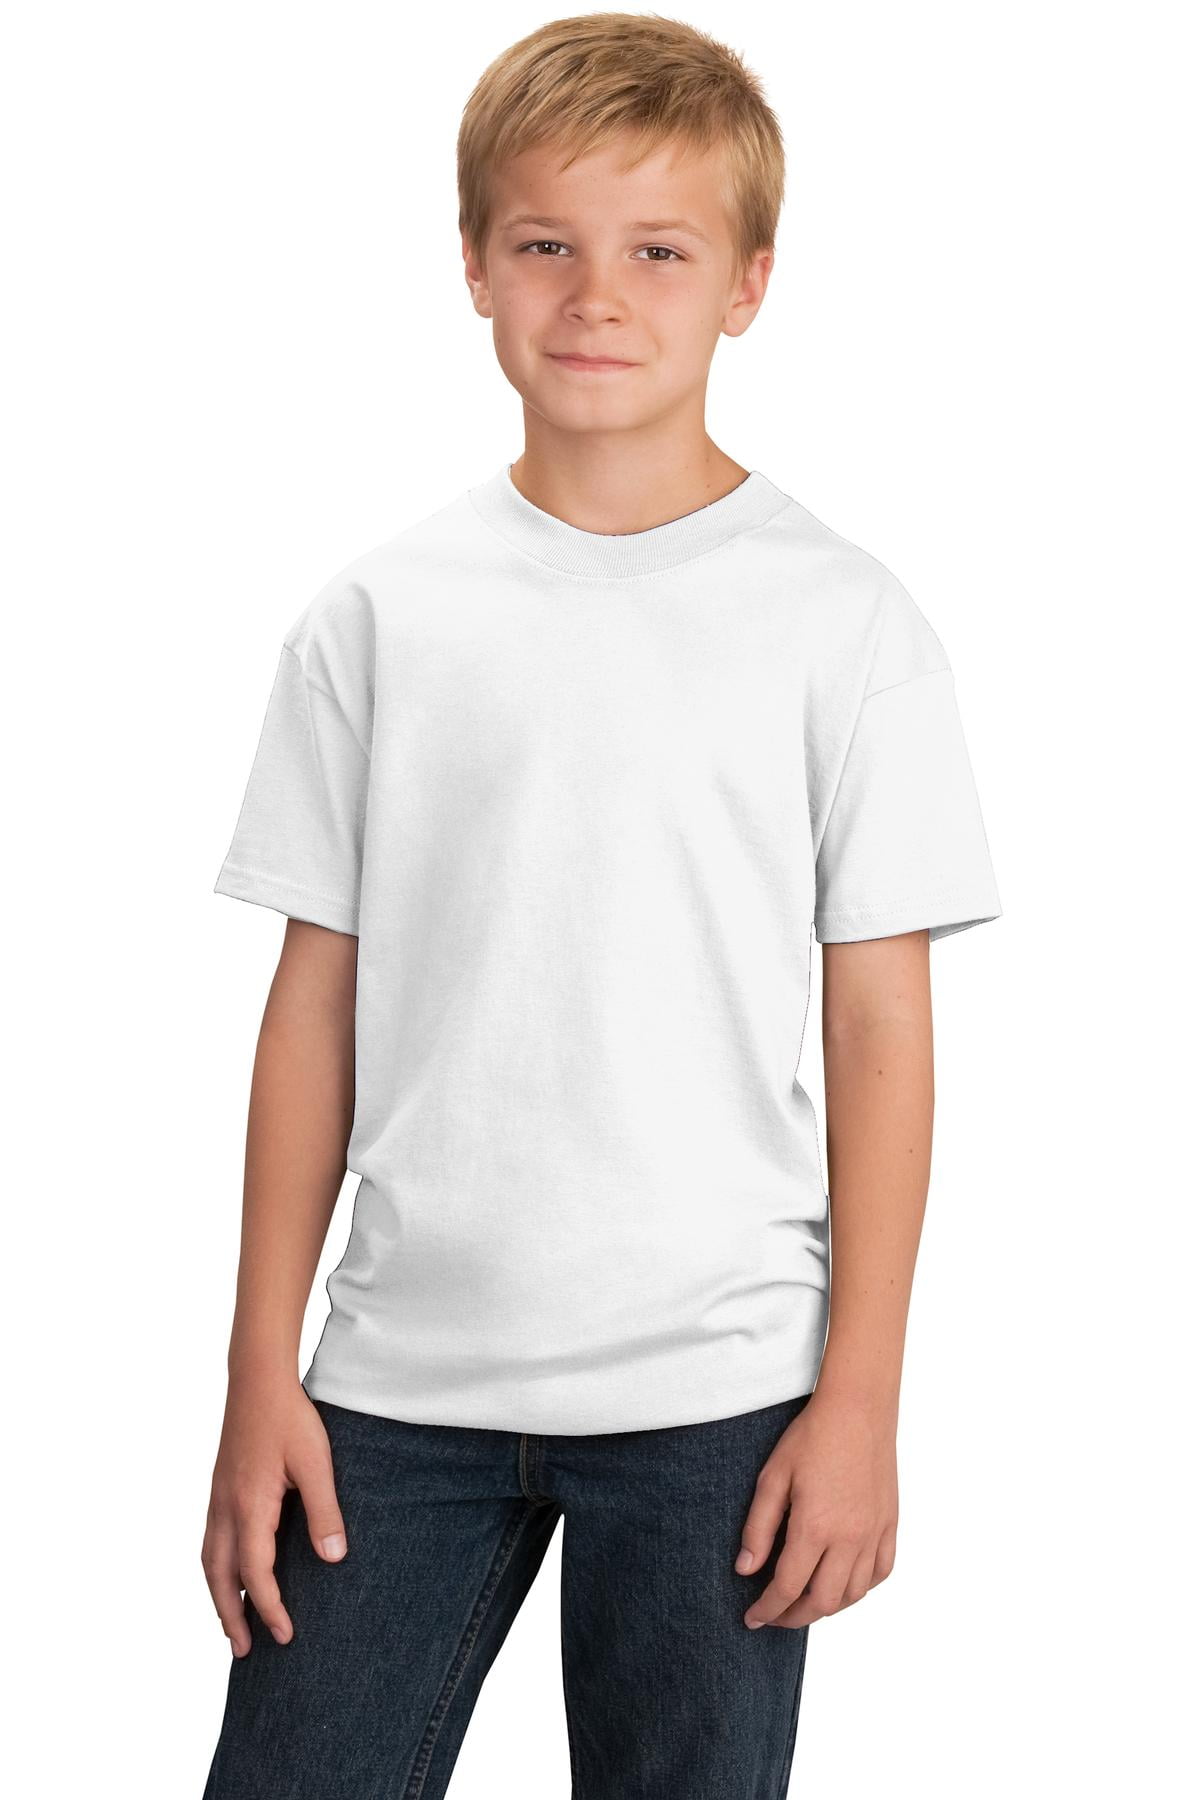 Port & Company - Port & Company Youth 5.4-oz Cotton T-Shirt. White. XL